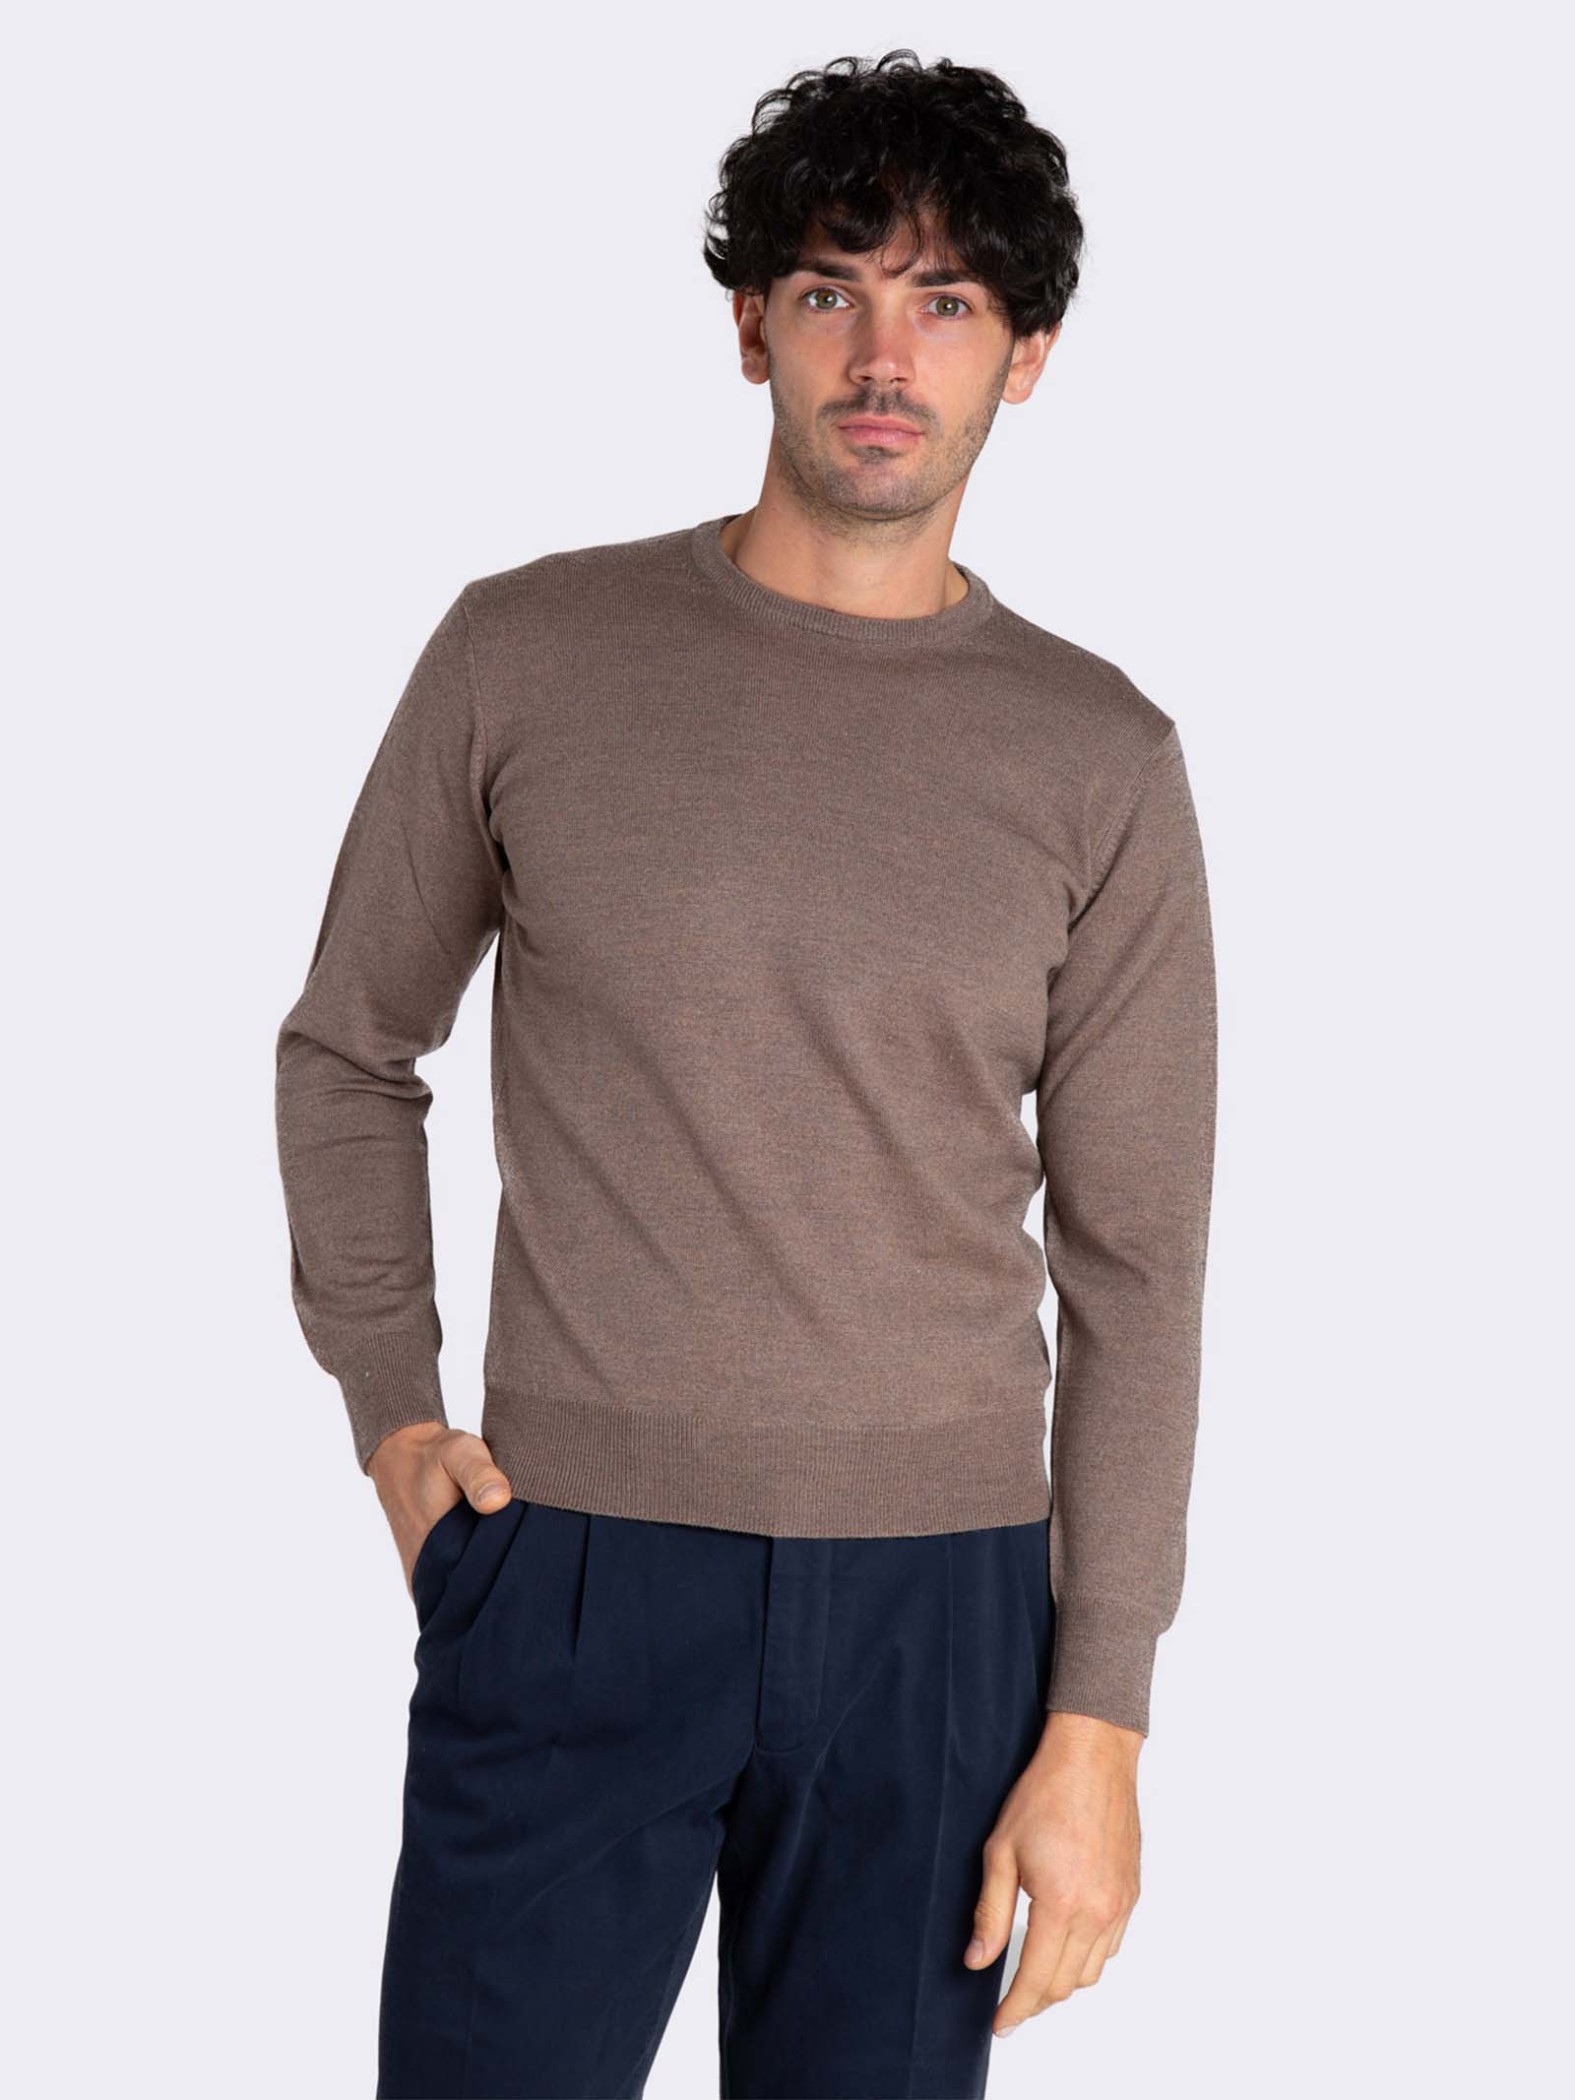 Men’s 100% merino wool crew neck sweater